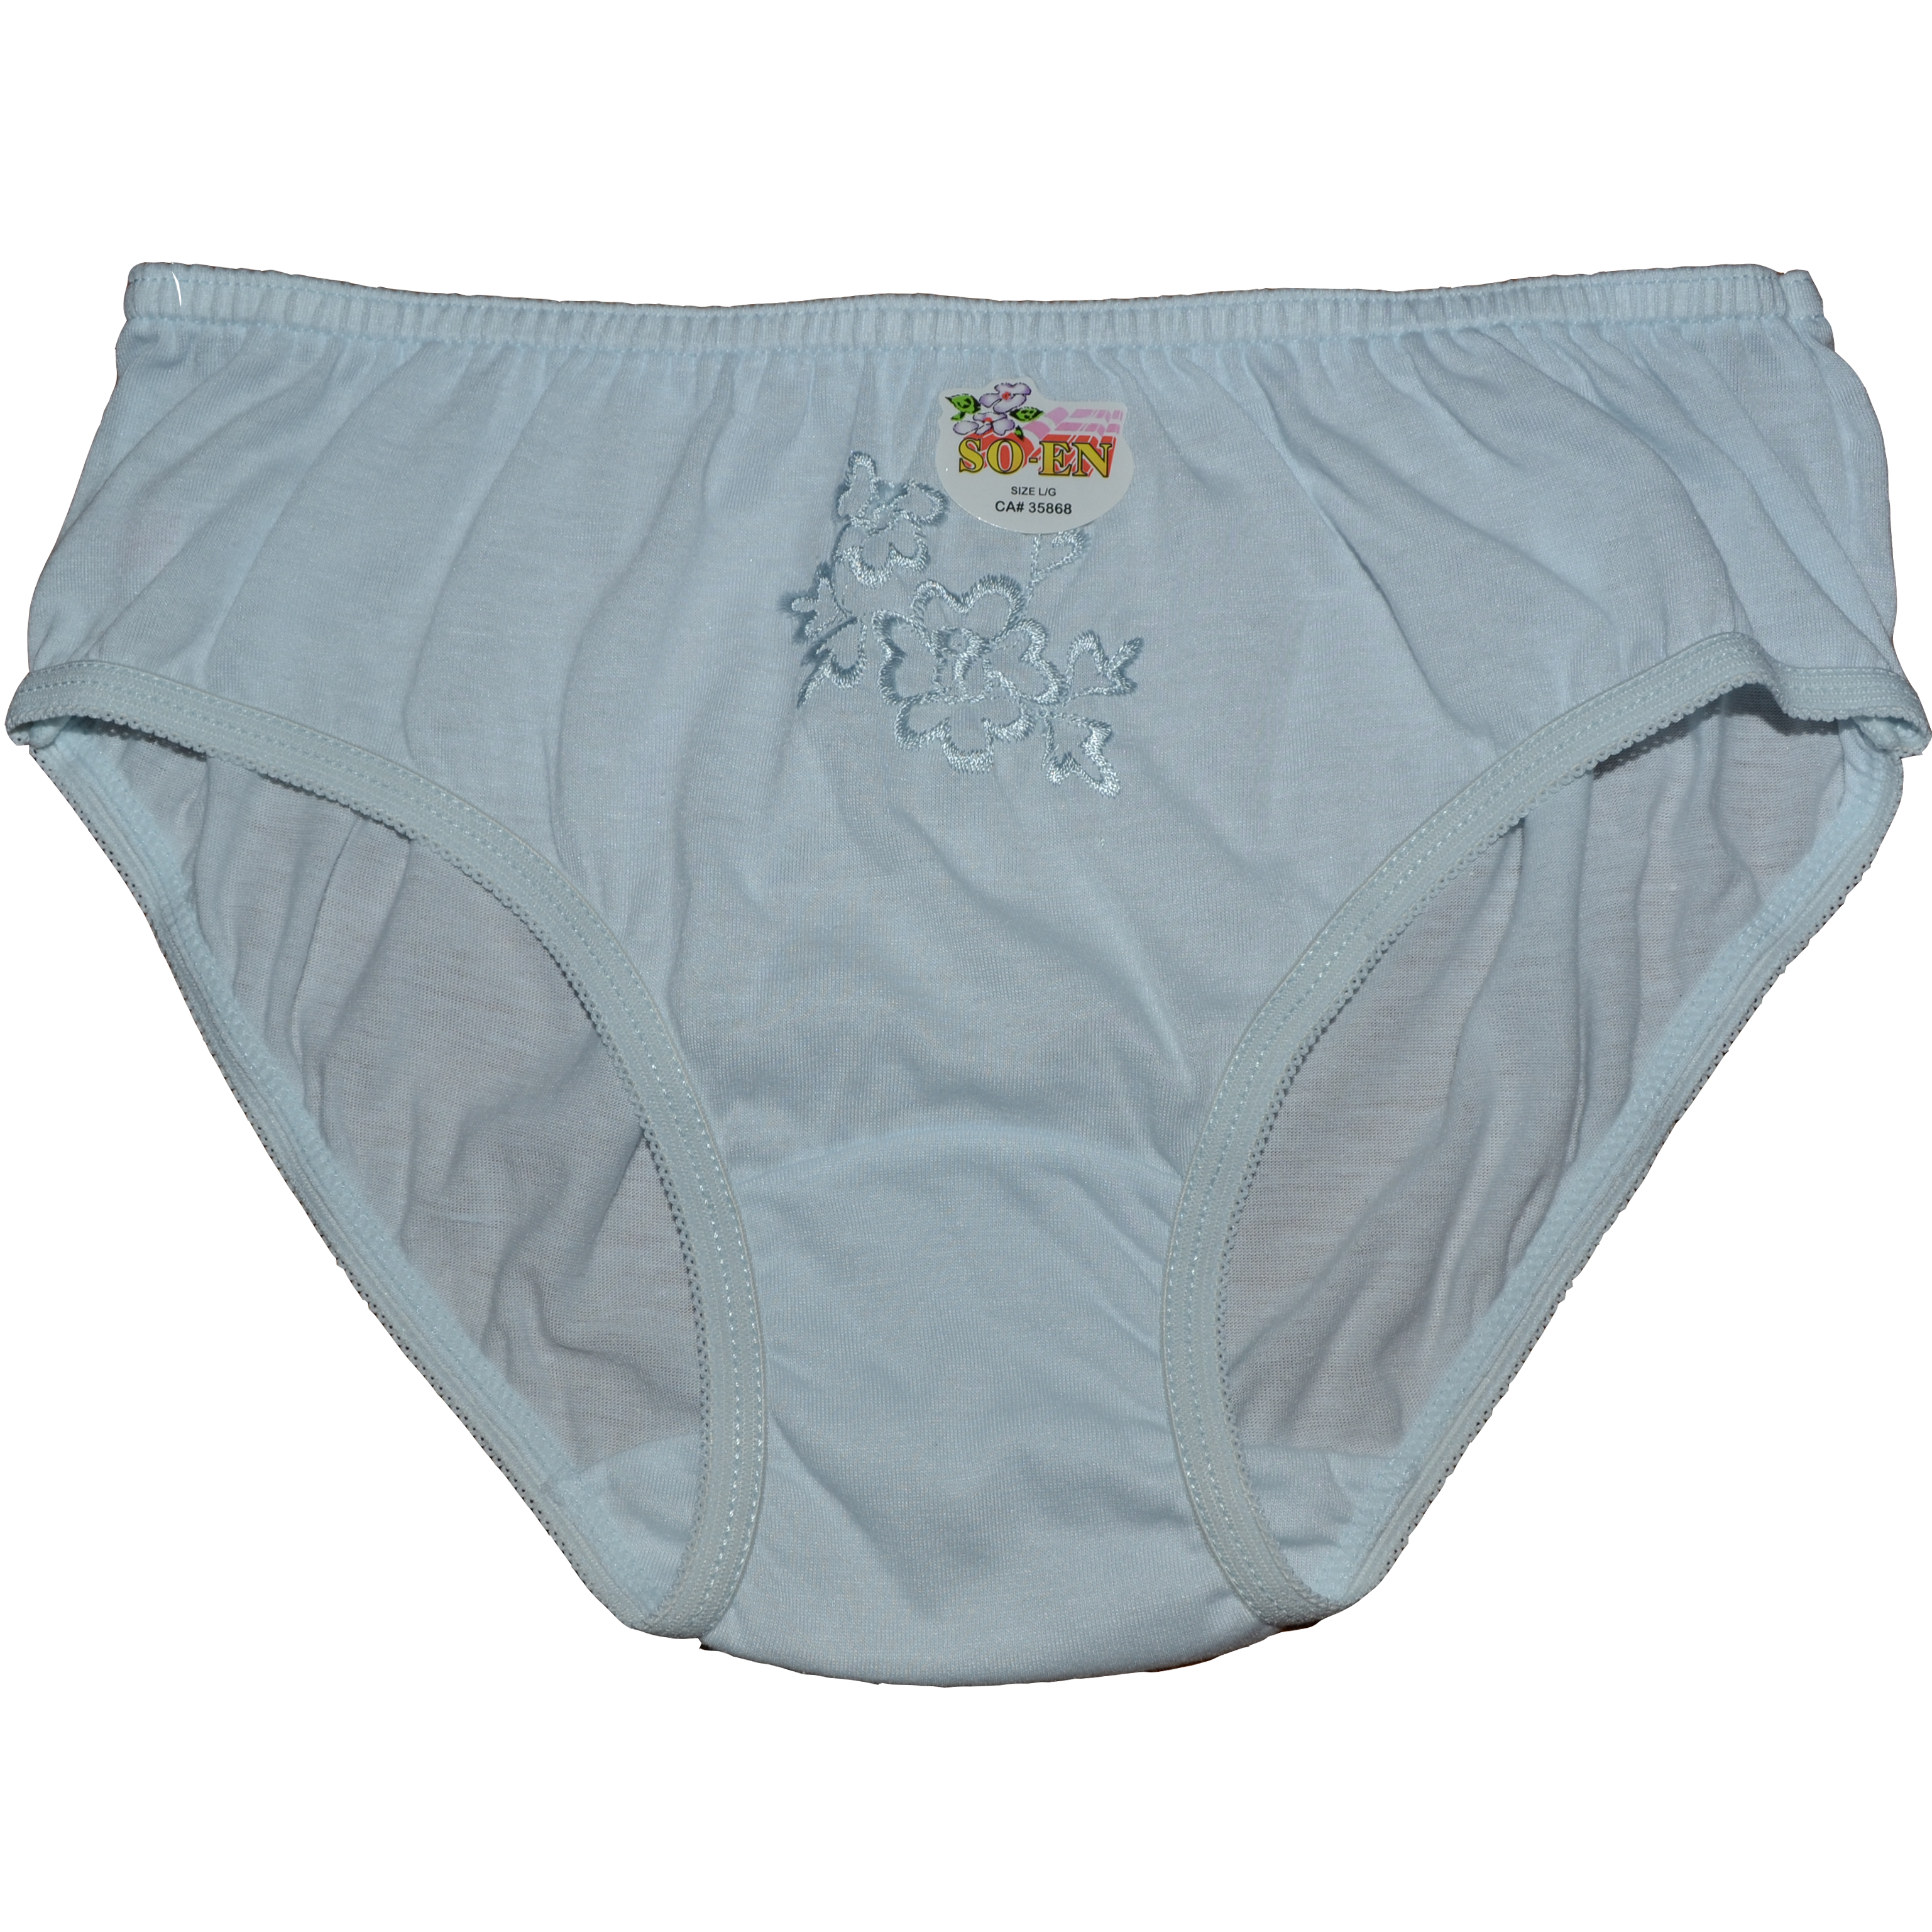 100% Original So-en Panty for Women New Style Bikini Cotton - 6pcs  High-Quality Ladies